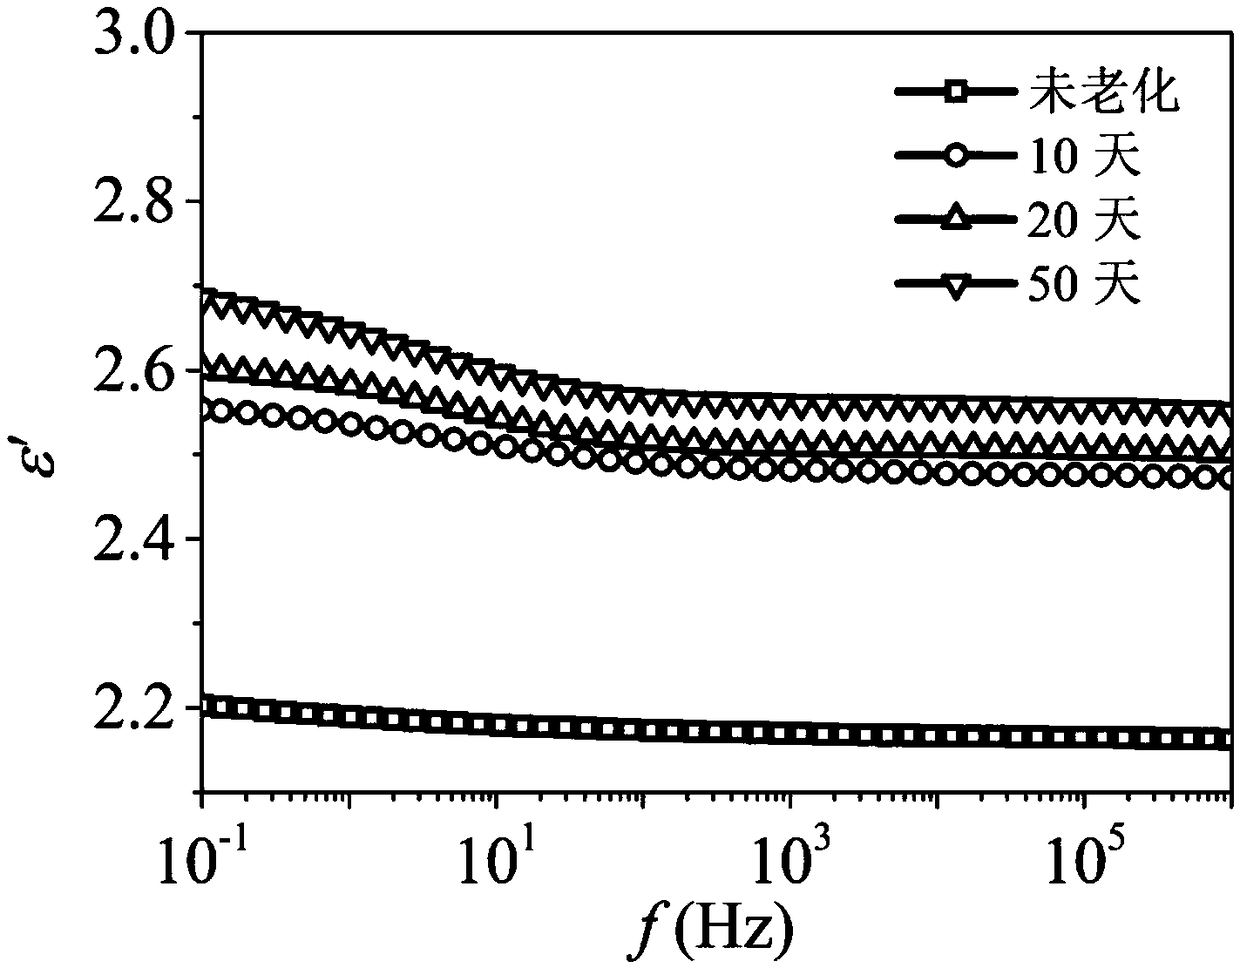 Logarithmic derivative analysis method based insulation aging state evaluation method of crosslinked polyethylene (XLPE) cable